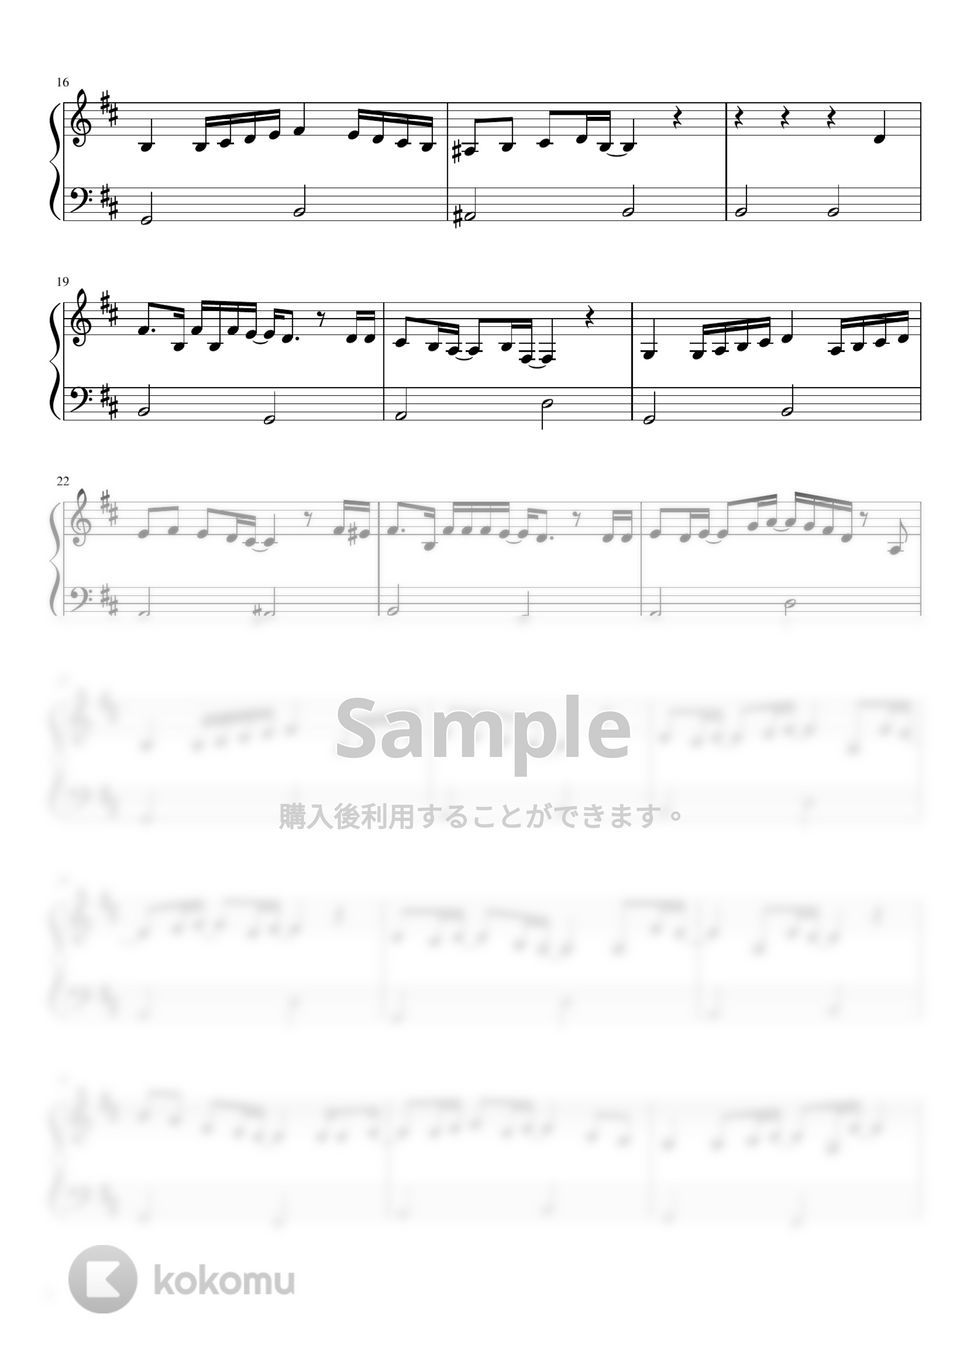 Ado - ギラギラ (ピアノソロ) by pianon